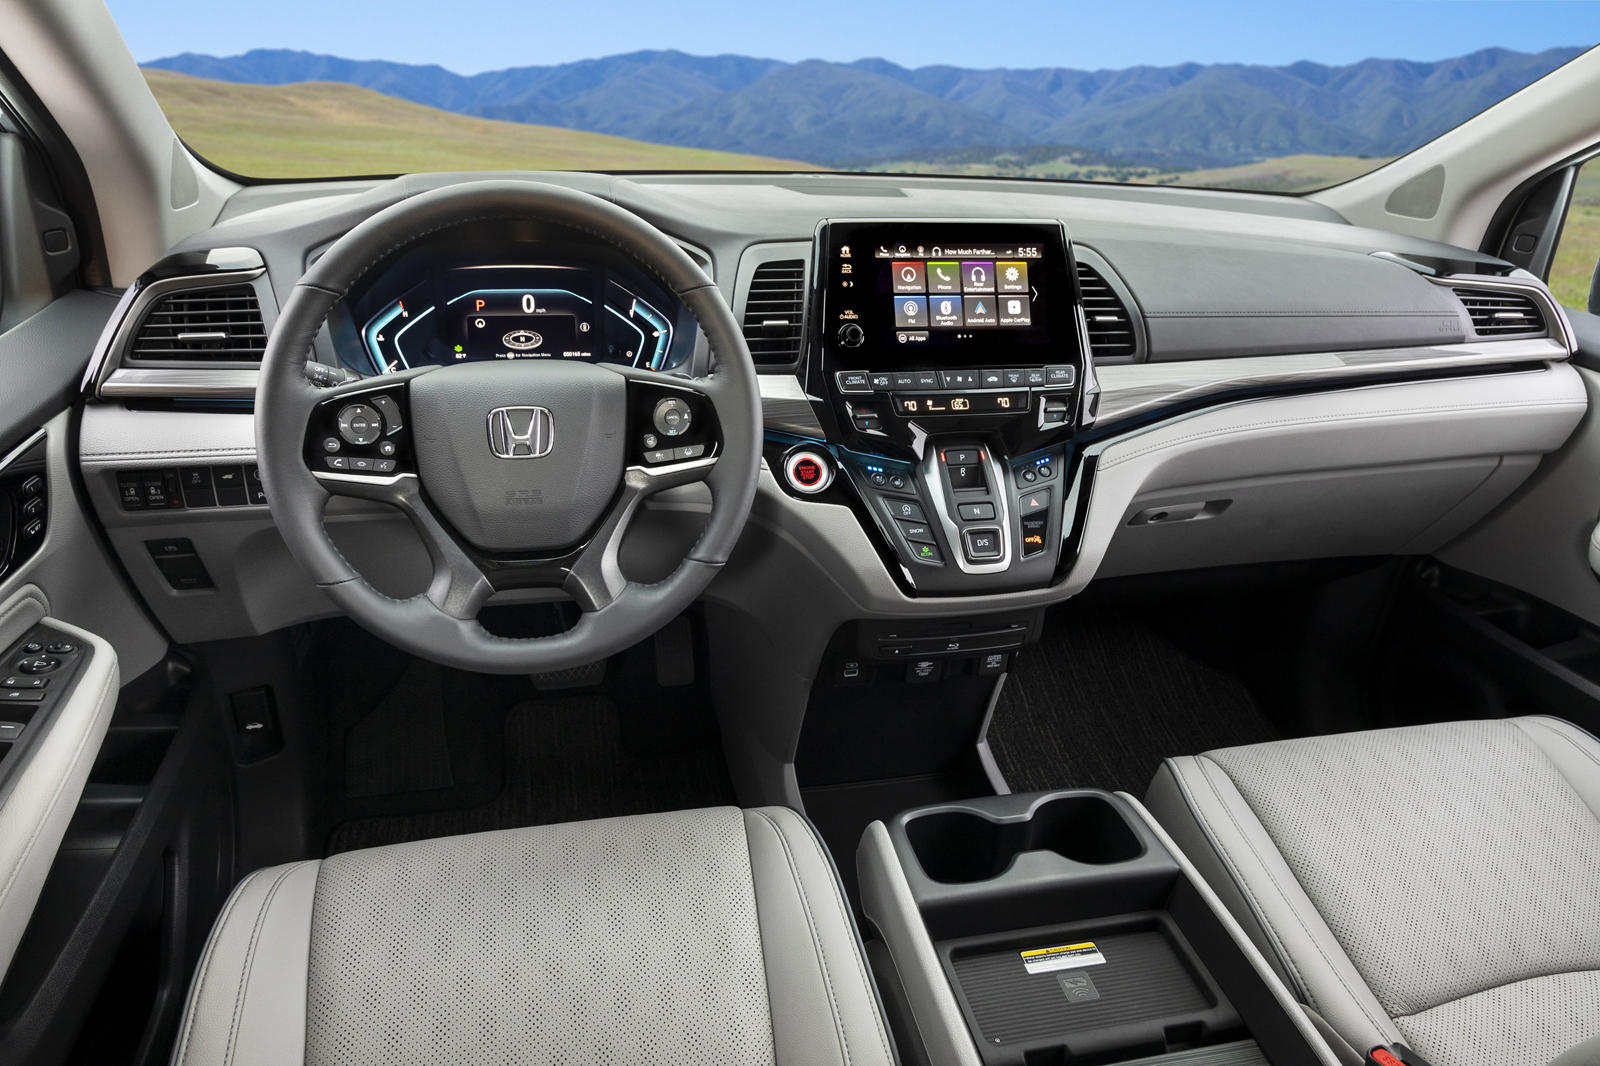 Honda Odyssey interior - Cockpit